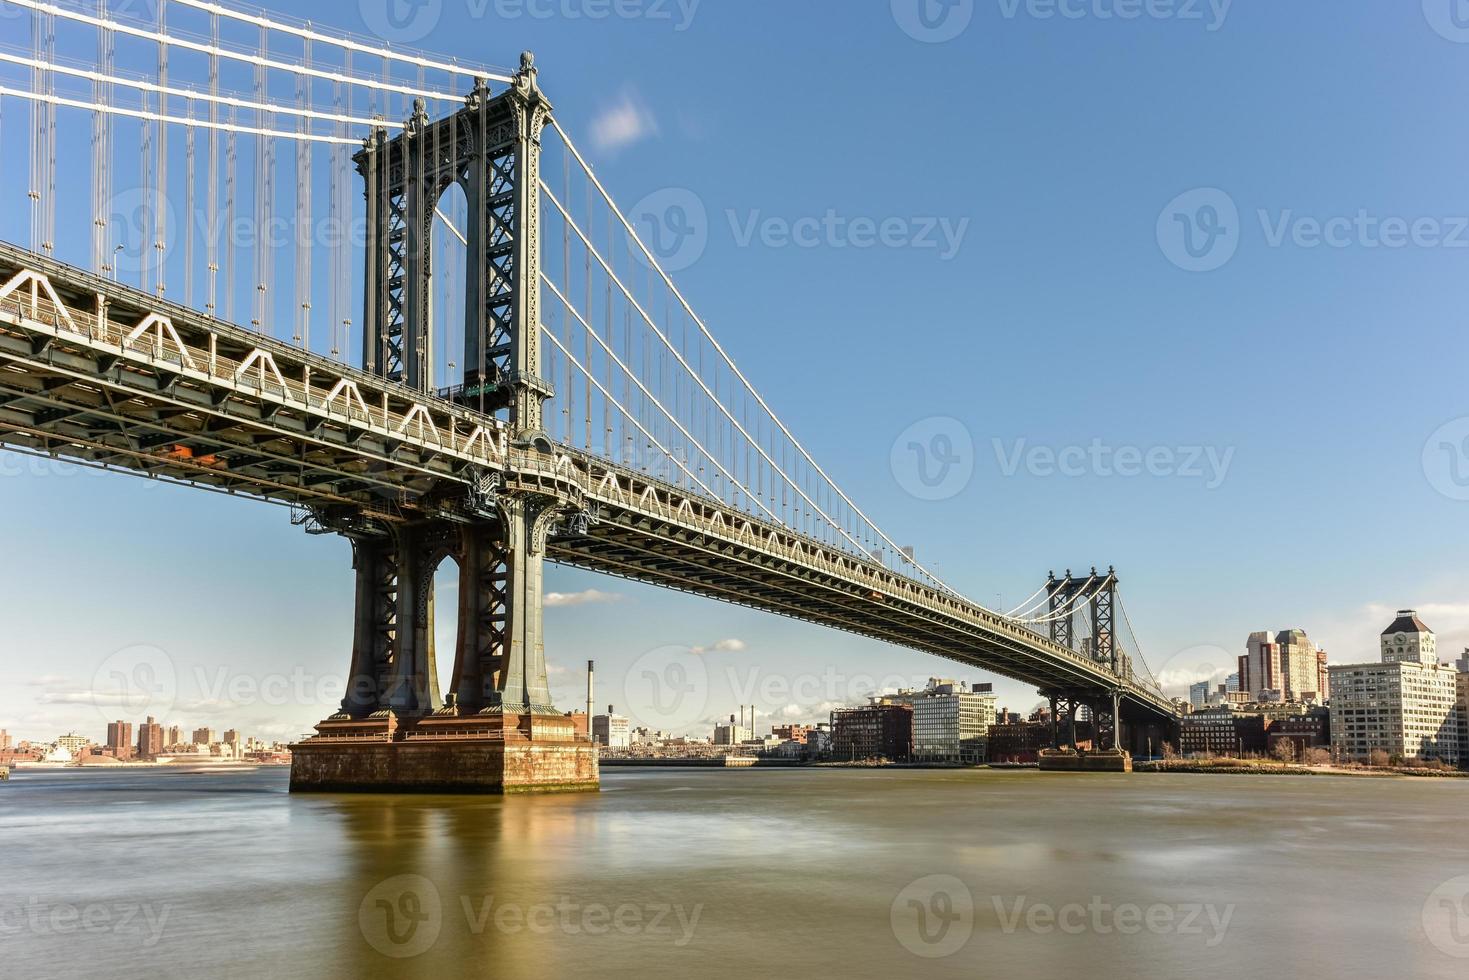 The Manhattan Bridge as seen from the Manhattan side in New York City. photo